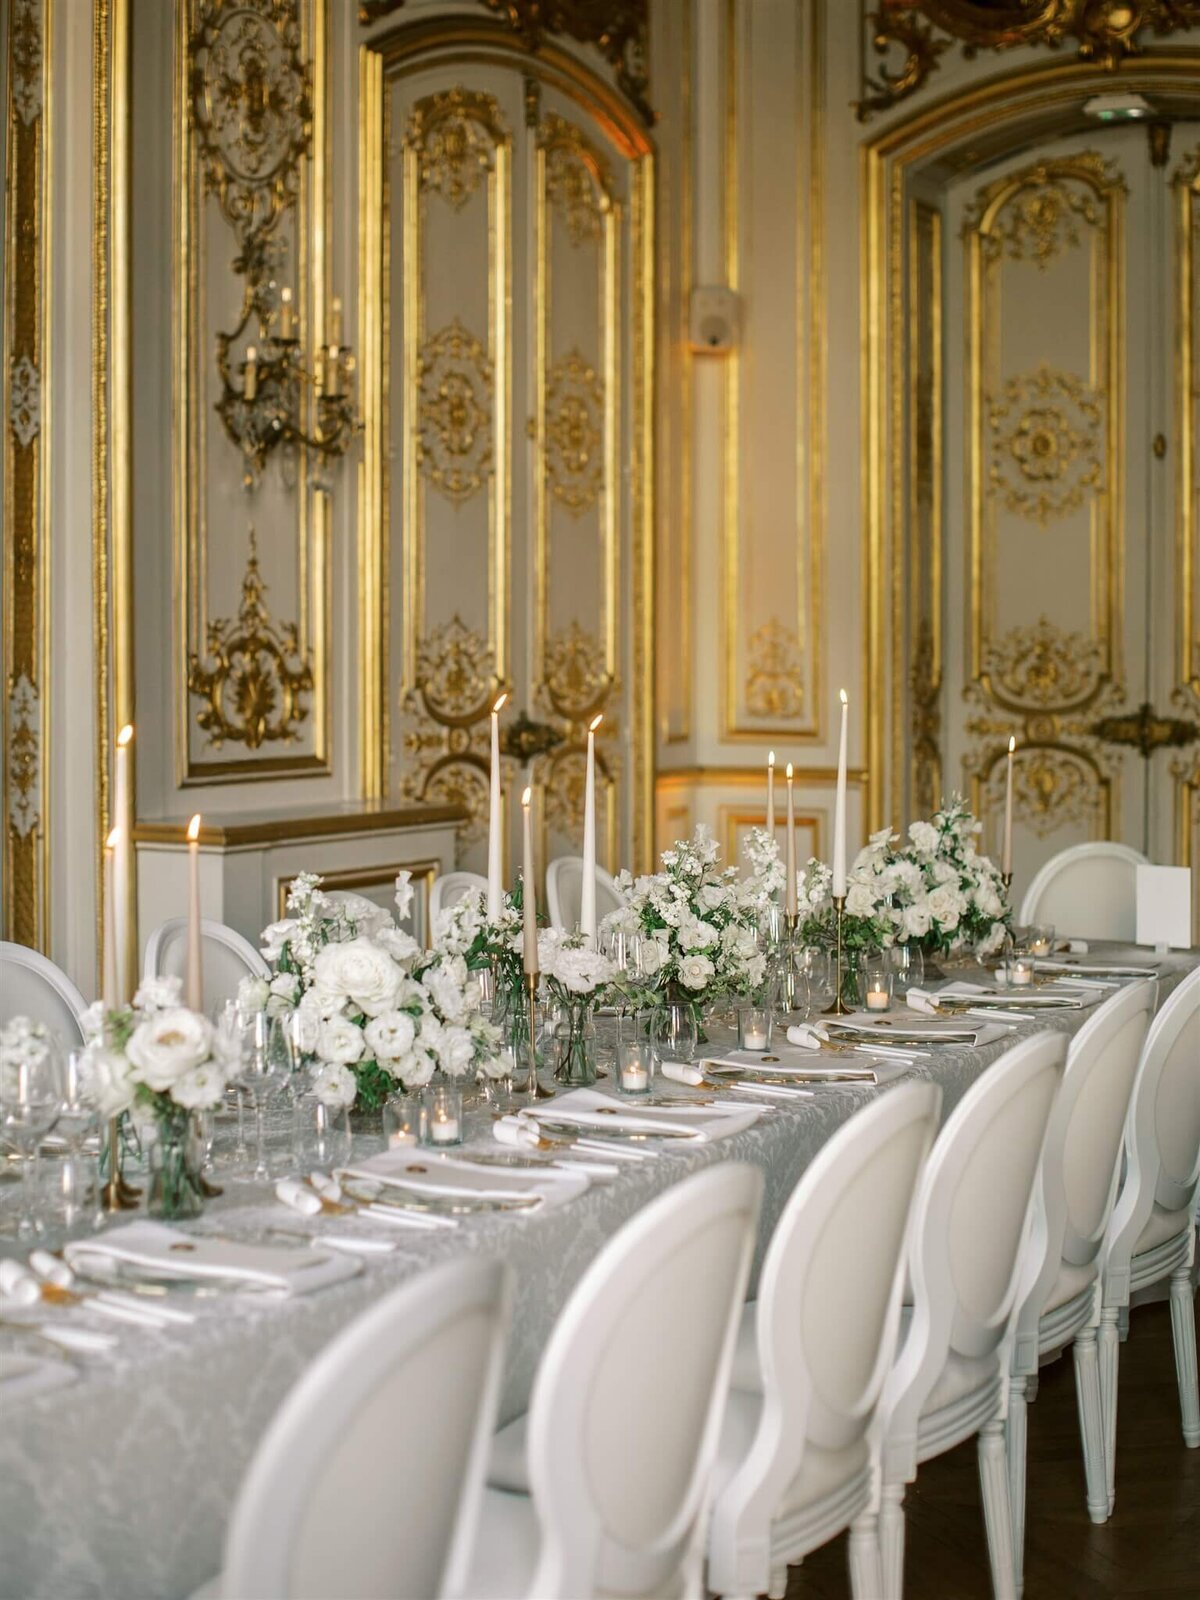 DianeSoteroPhotography_Wedding_StJamesHotel_HotelLeMarois_Paris_France_437